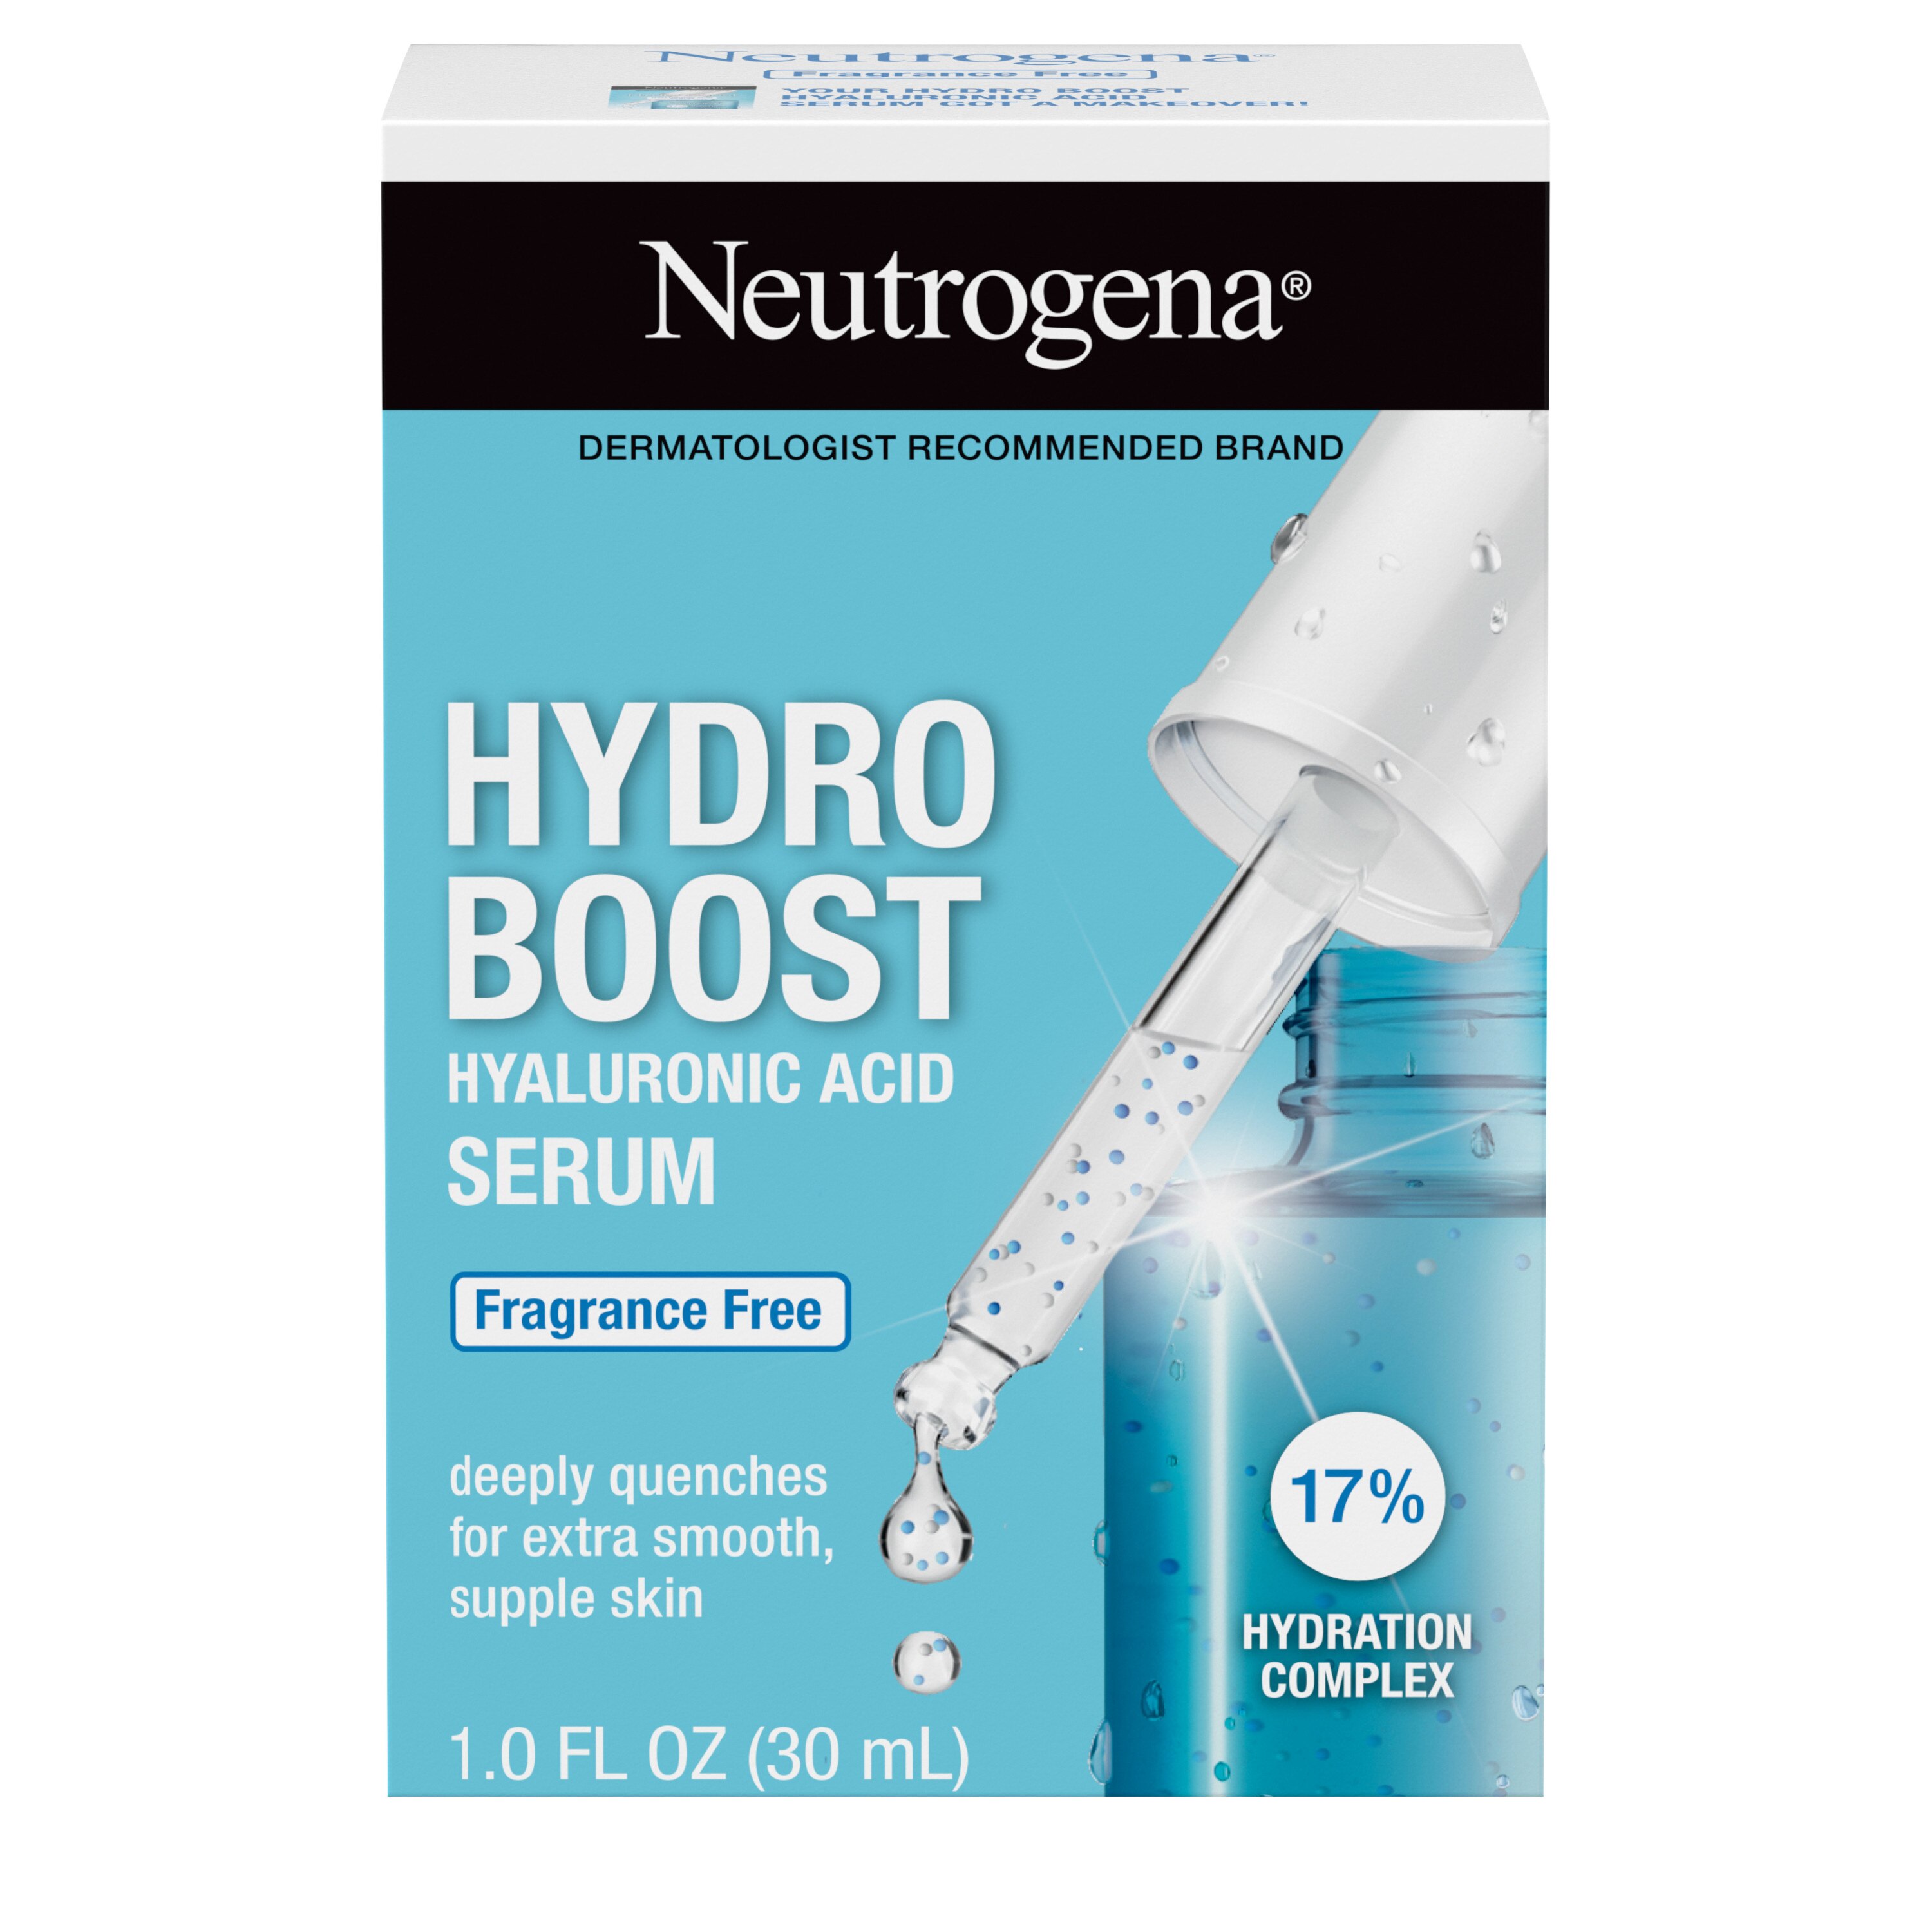 Neutrogena Hydro Boost Purified Hyaluronic Acid Serum